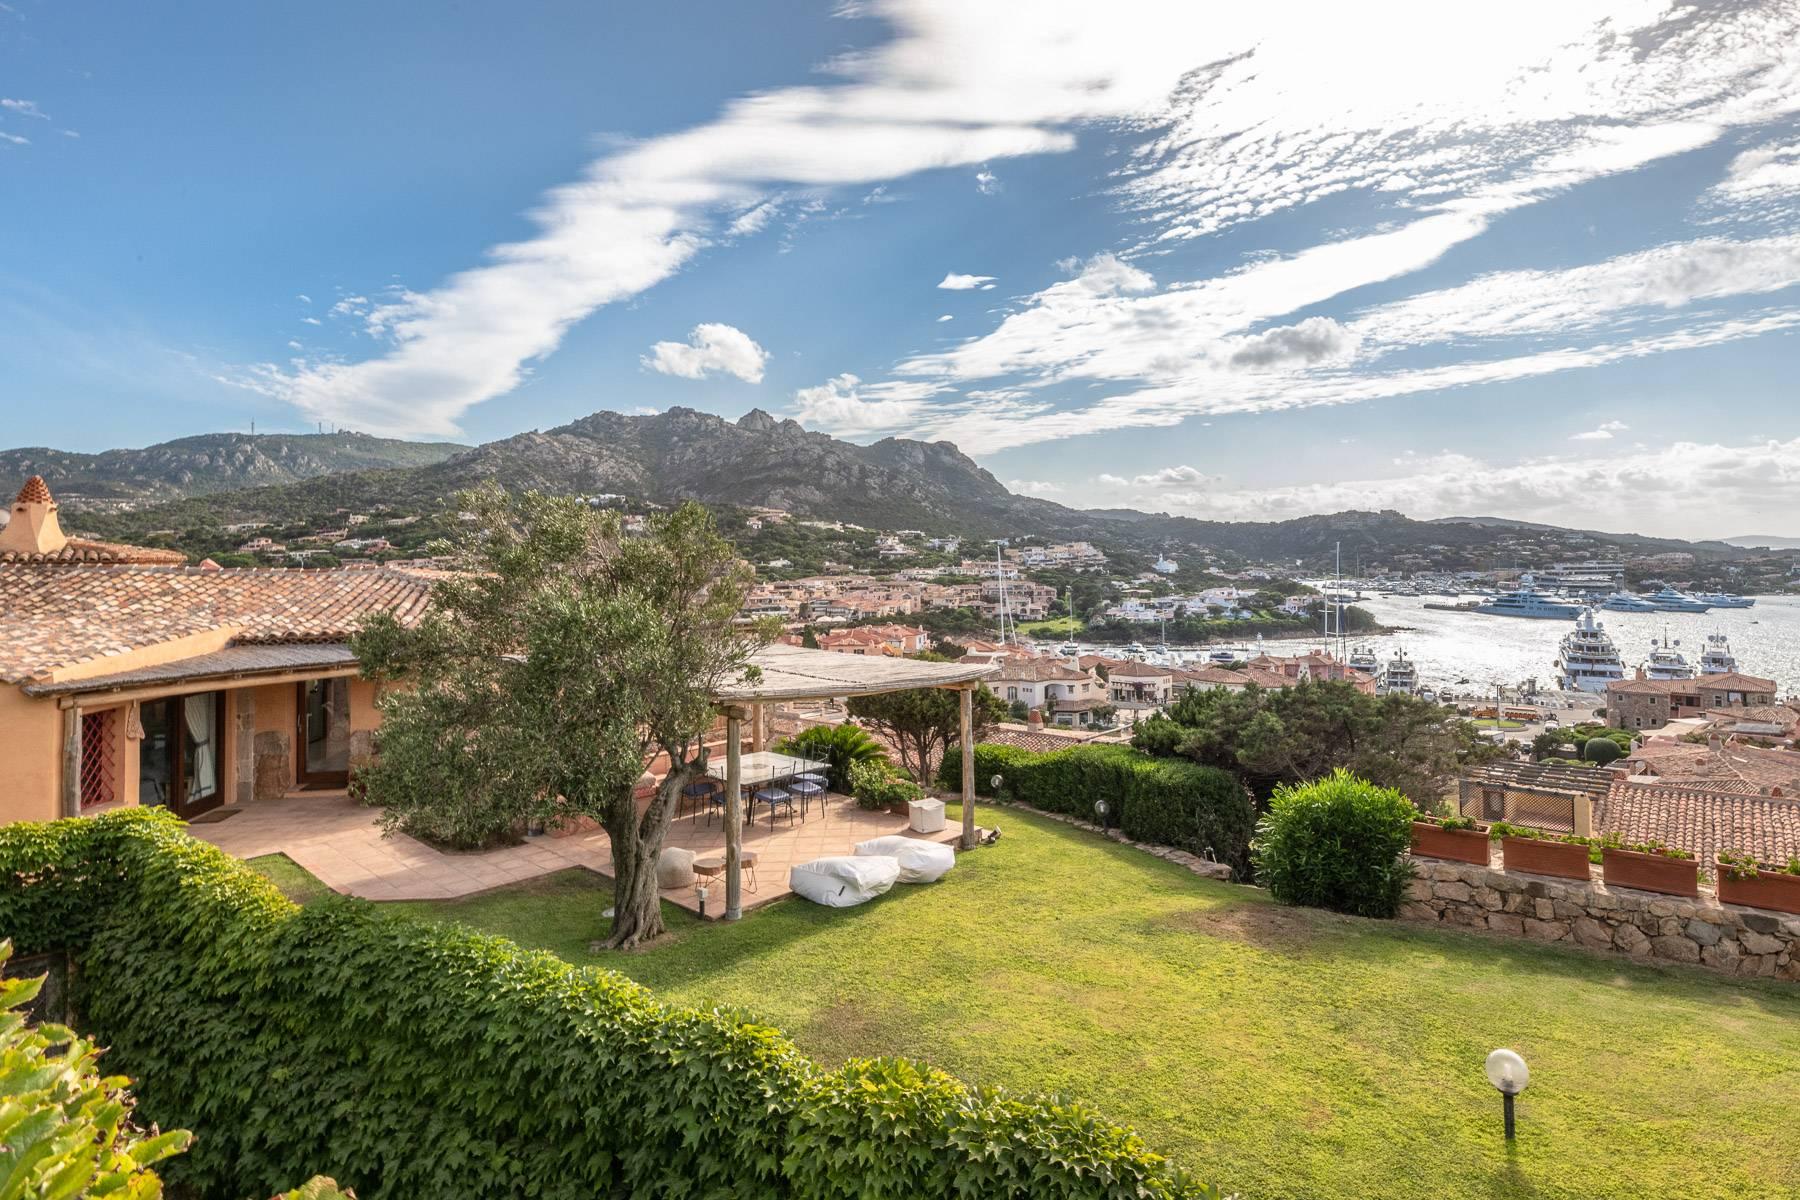 Villa with garden and breathtaking views in the heart of Porto Cervo. - 26